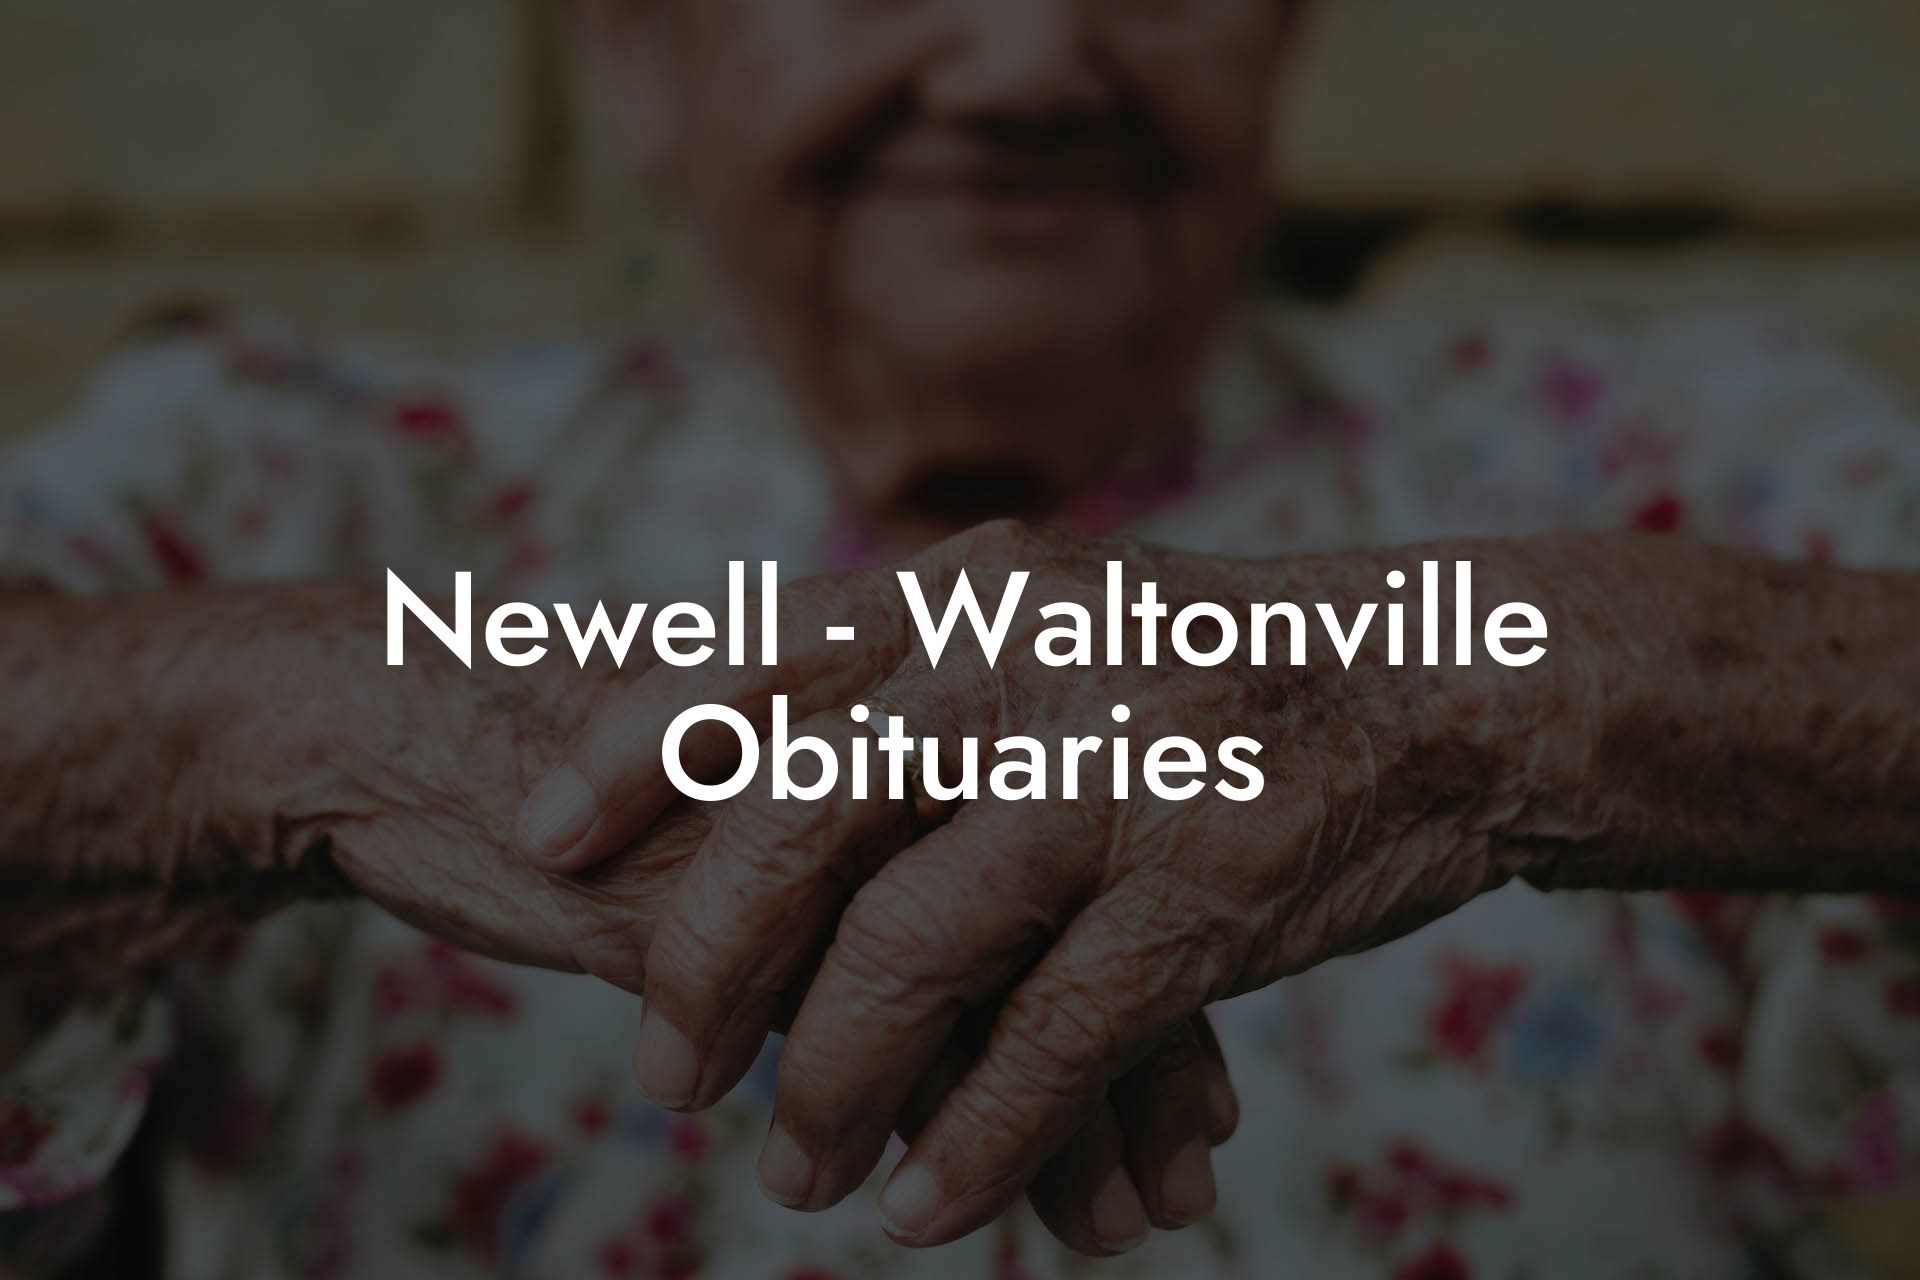 Newell - Waltonville Obituaries